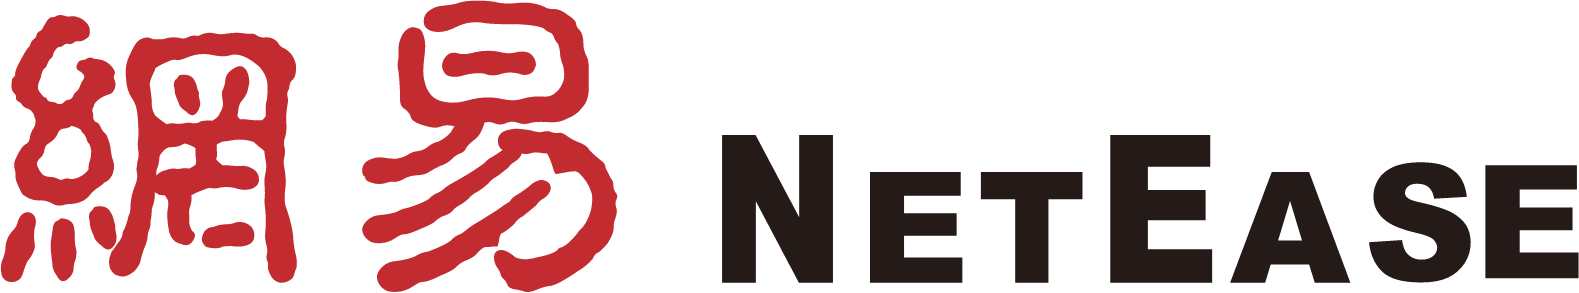 NetEase logo large (transparent PNG)